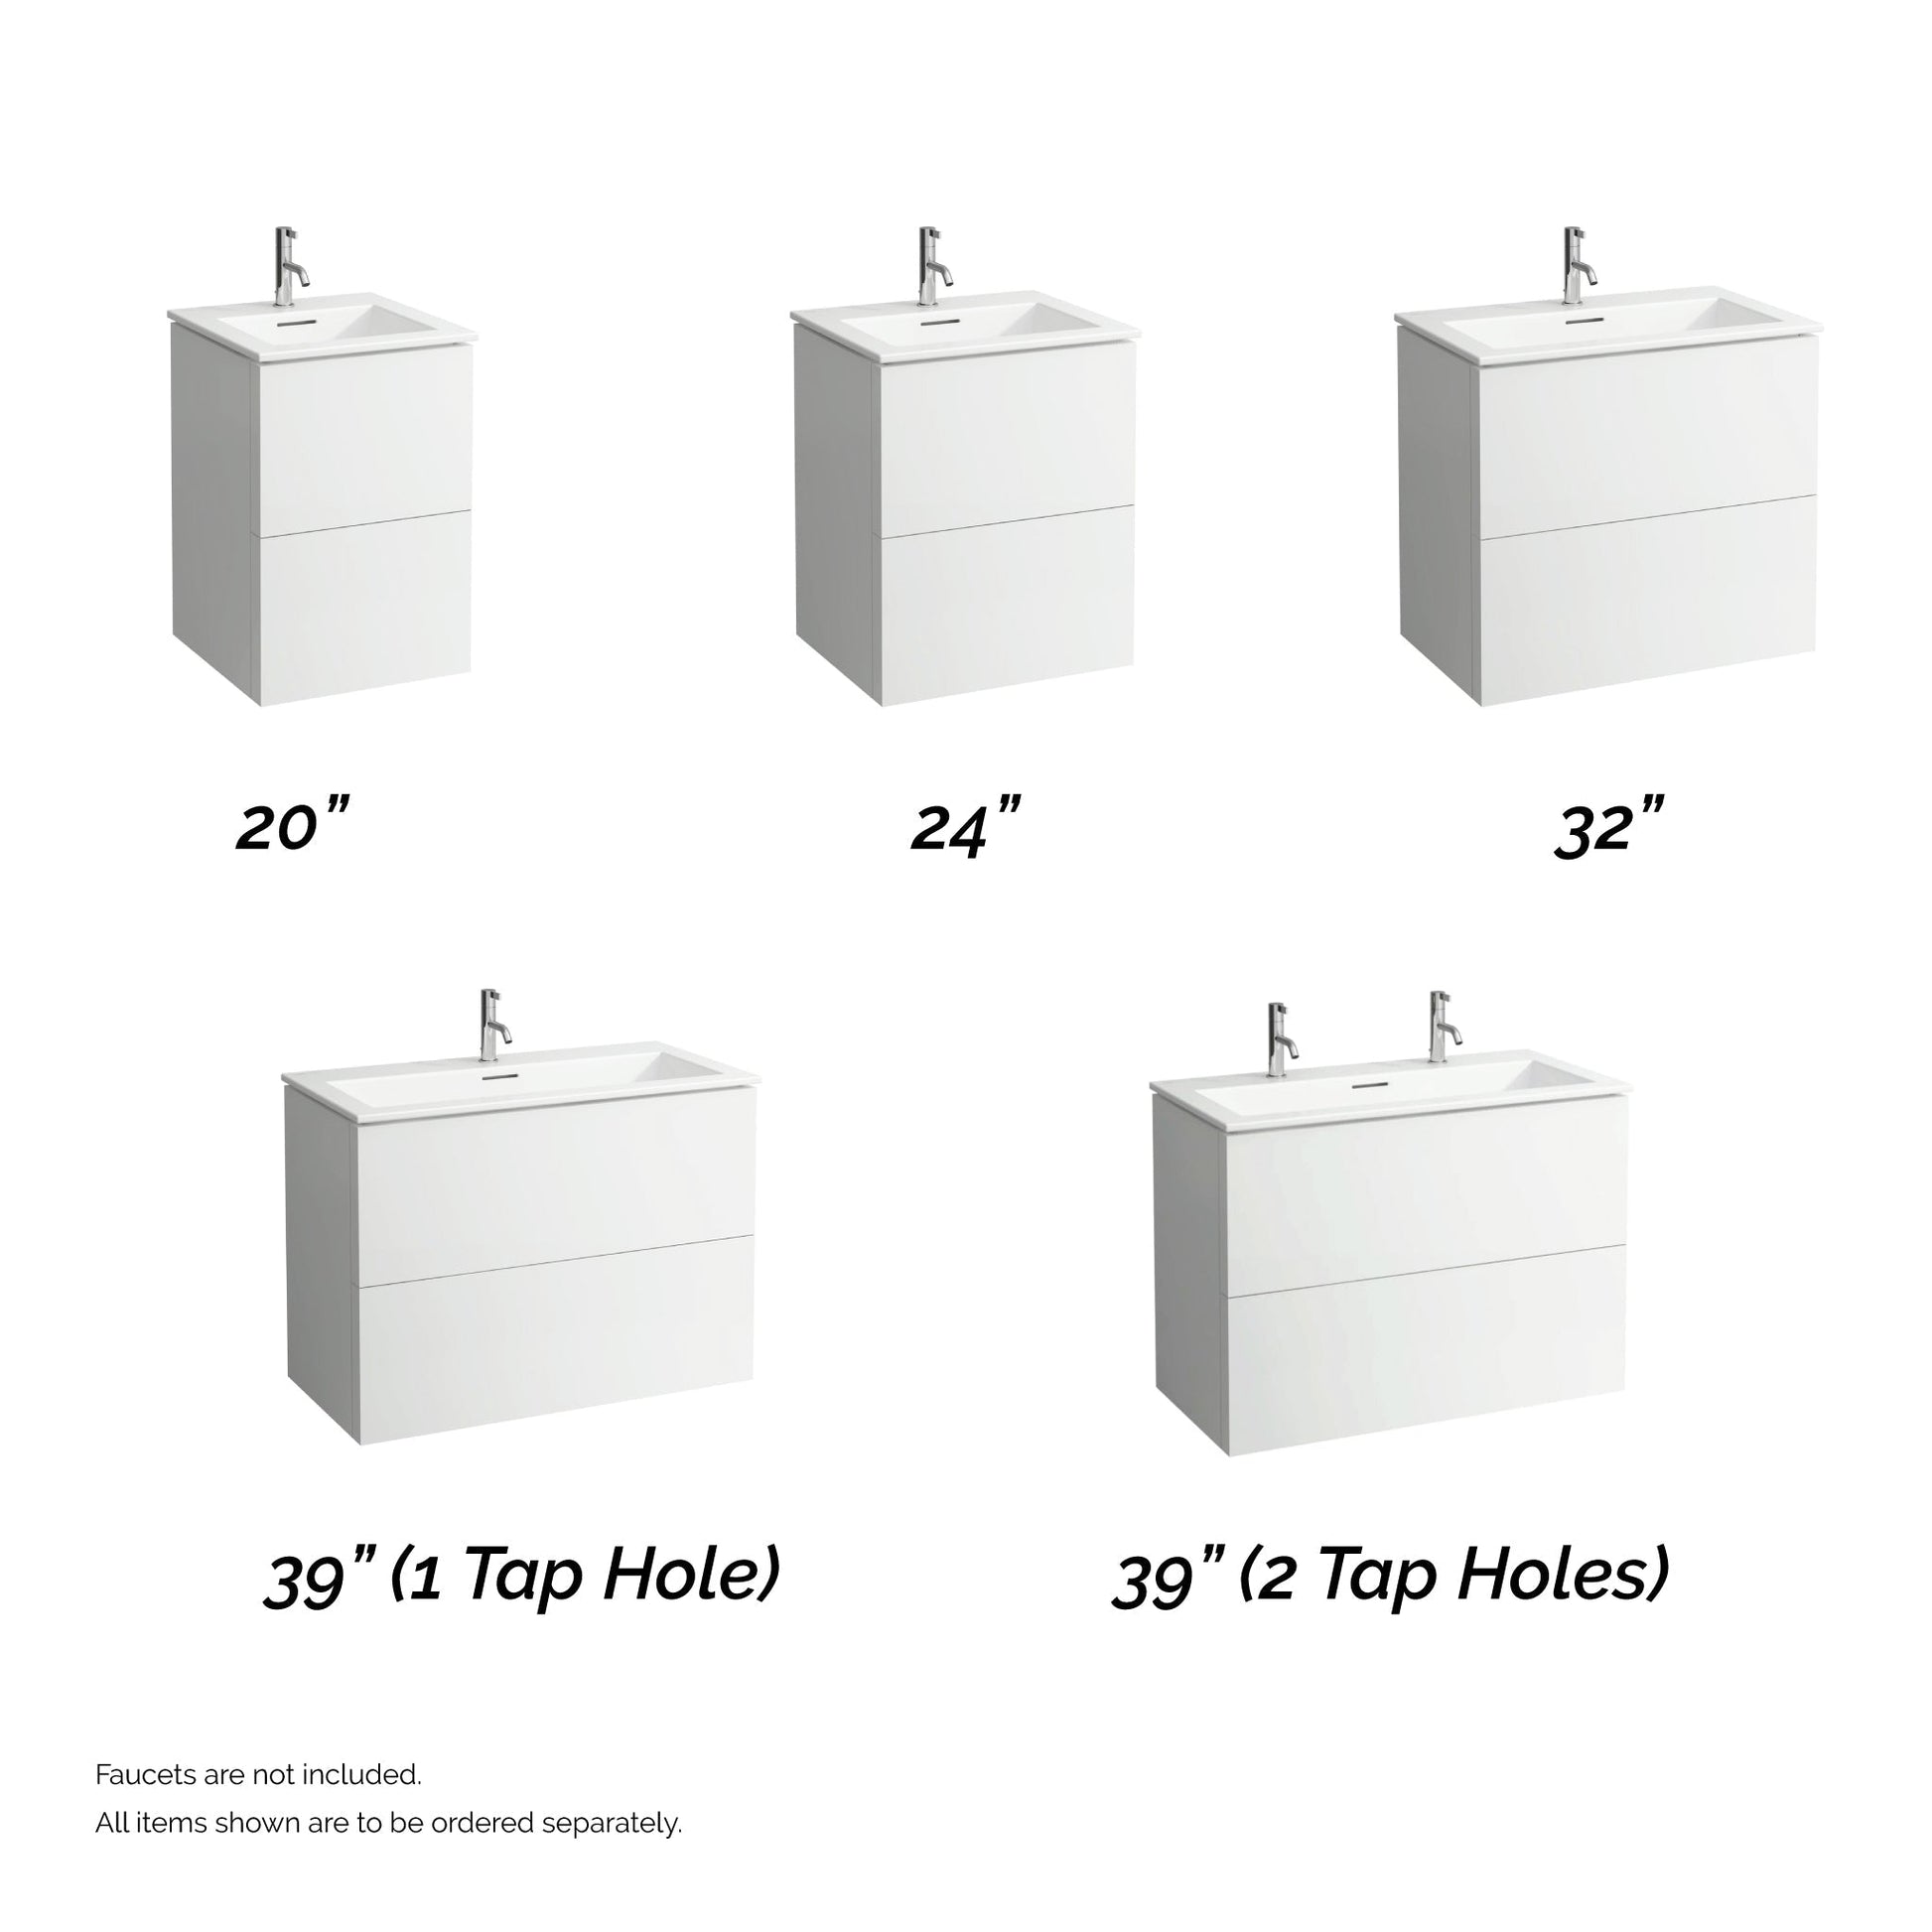 Laufen Kartell 24" 2-Drawer Pebble Gray Wall-Mounted Vanity Set With Single-Hole Bathroom Sink